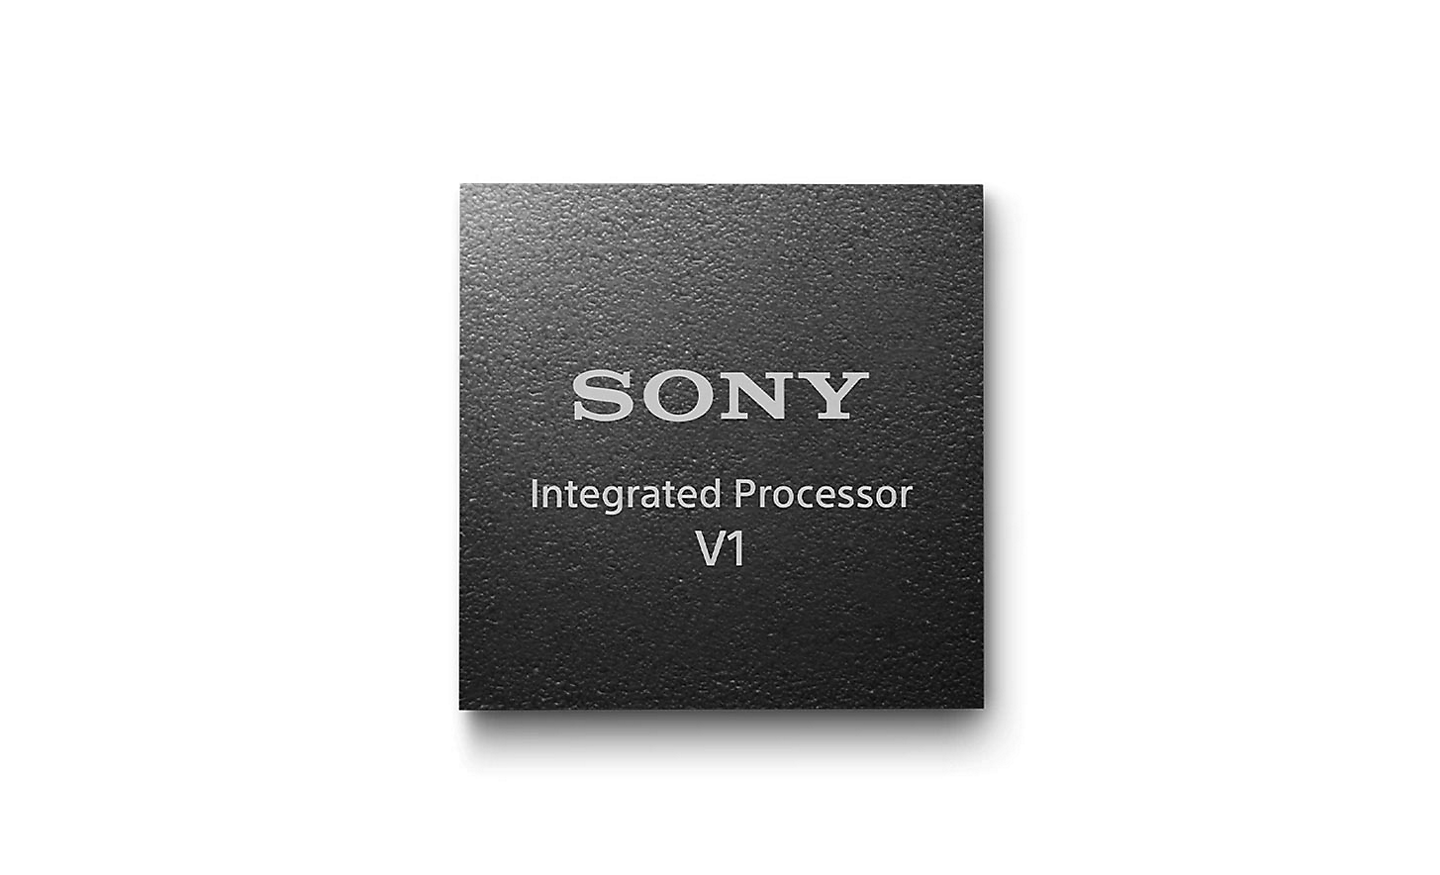 Sony 整合處理器 V1 的影像